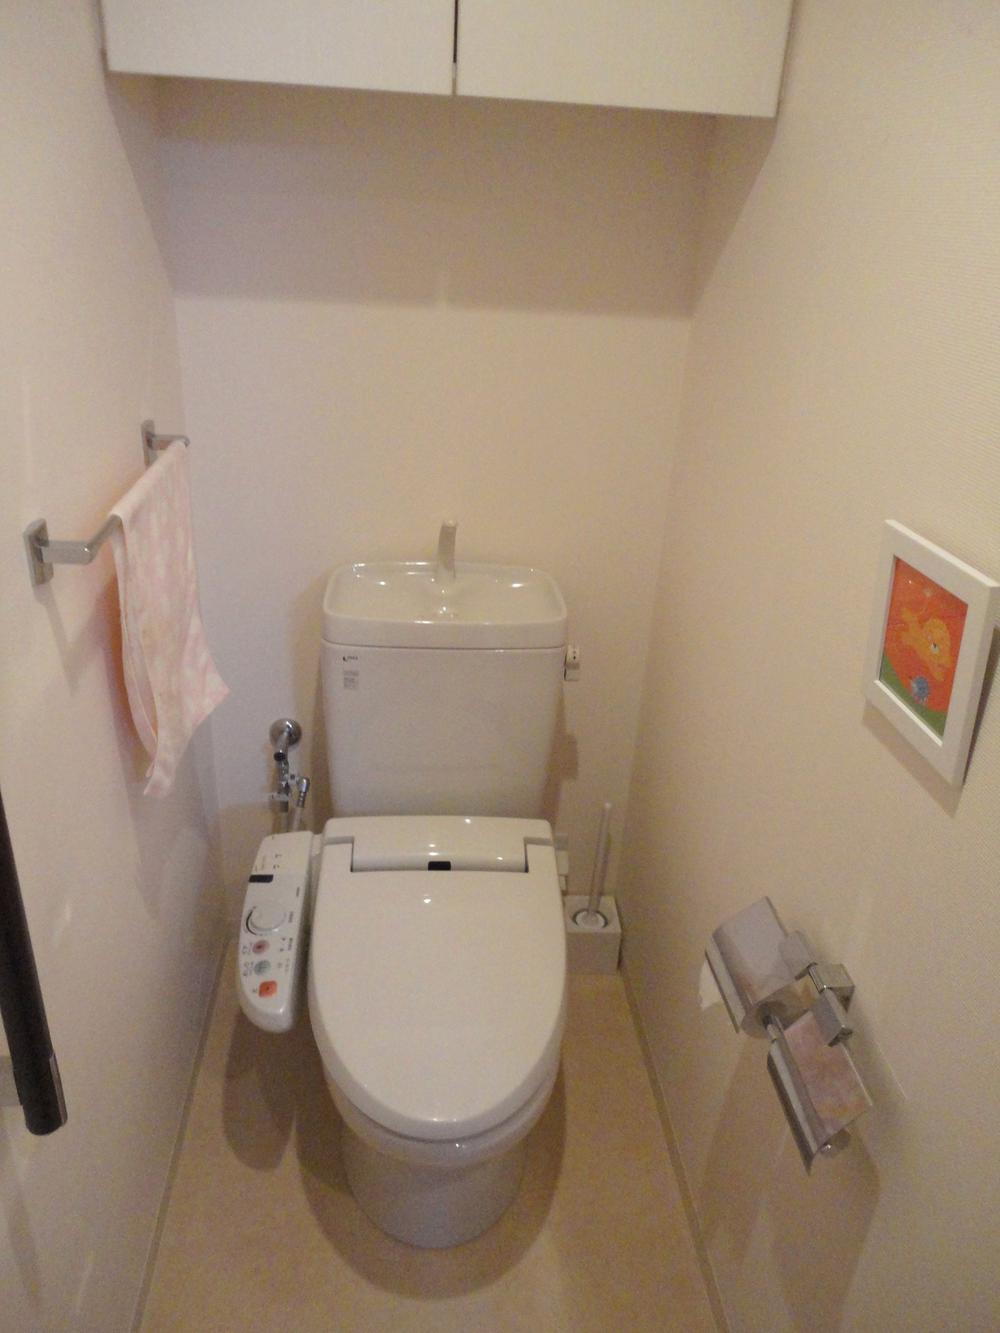 Toilet. Toilet (December 2013 shooting)